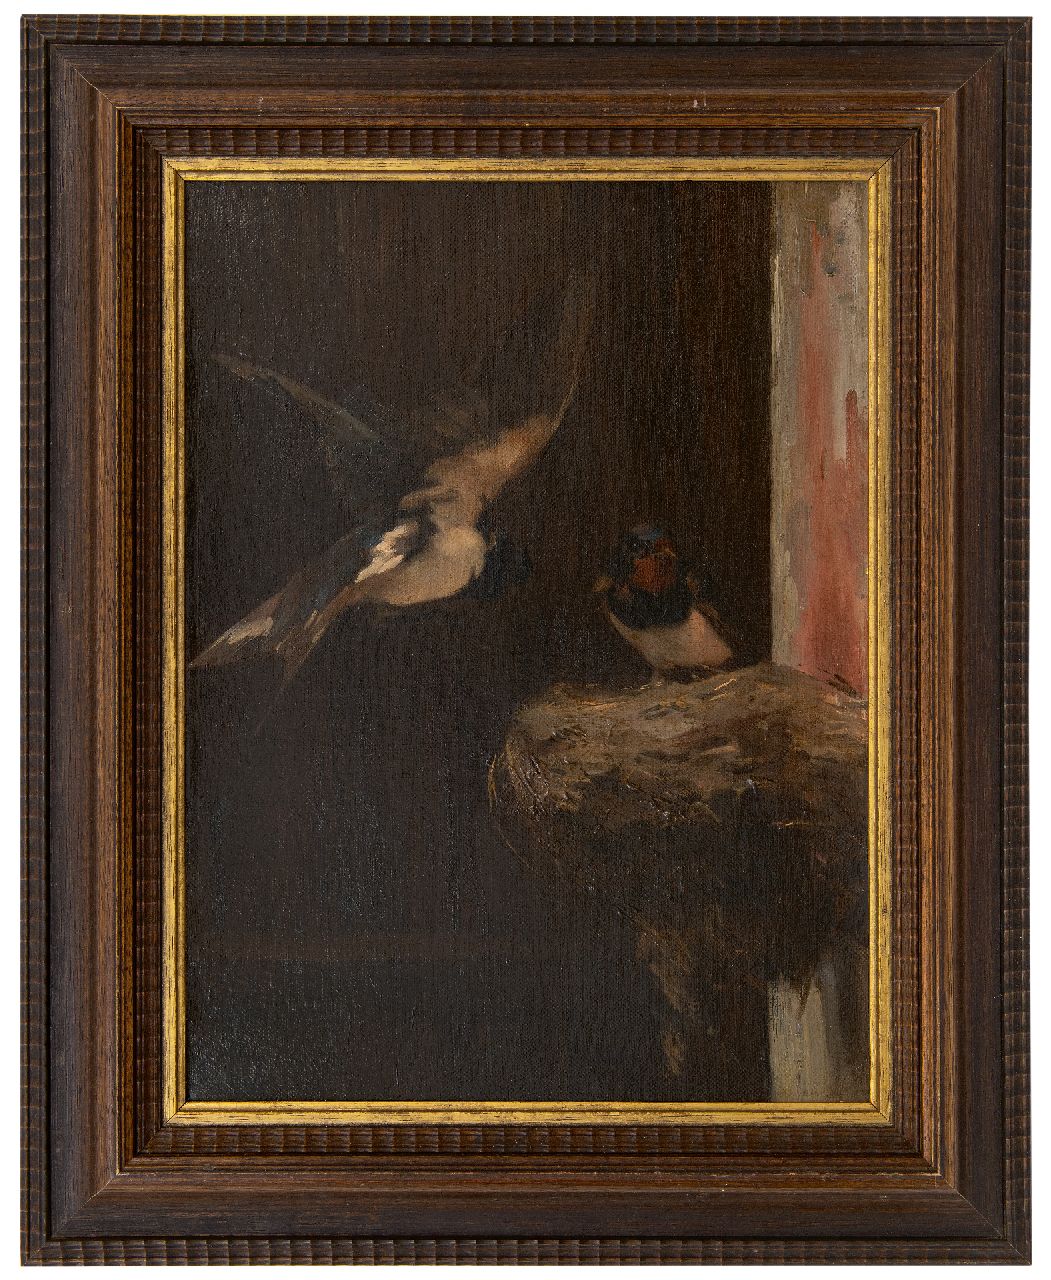 Stortenbeker C.S.  | Cornelis Samuel Stortenbeker, Nesting swallows, oil on canvas 46.6 x 34.7 cm, signed l.l. with initials